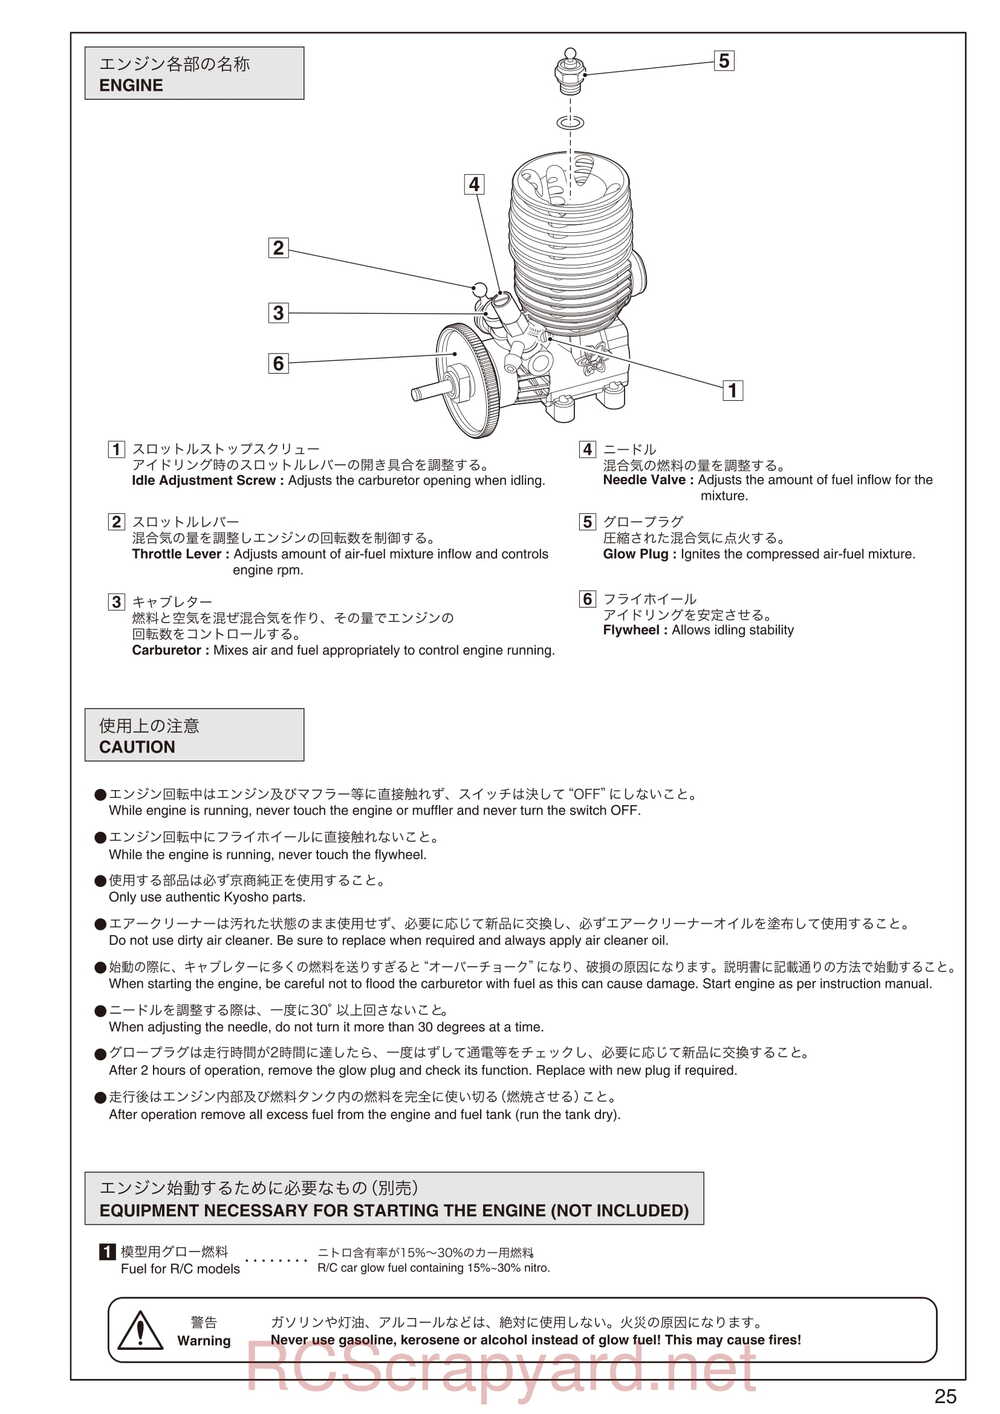 Kyosho - 31003 - SPADA-09L - Manual - Page 25